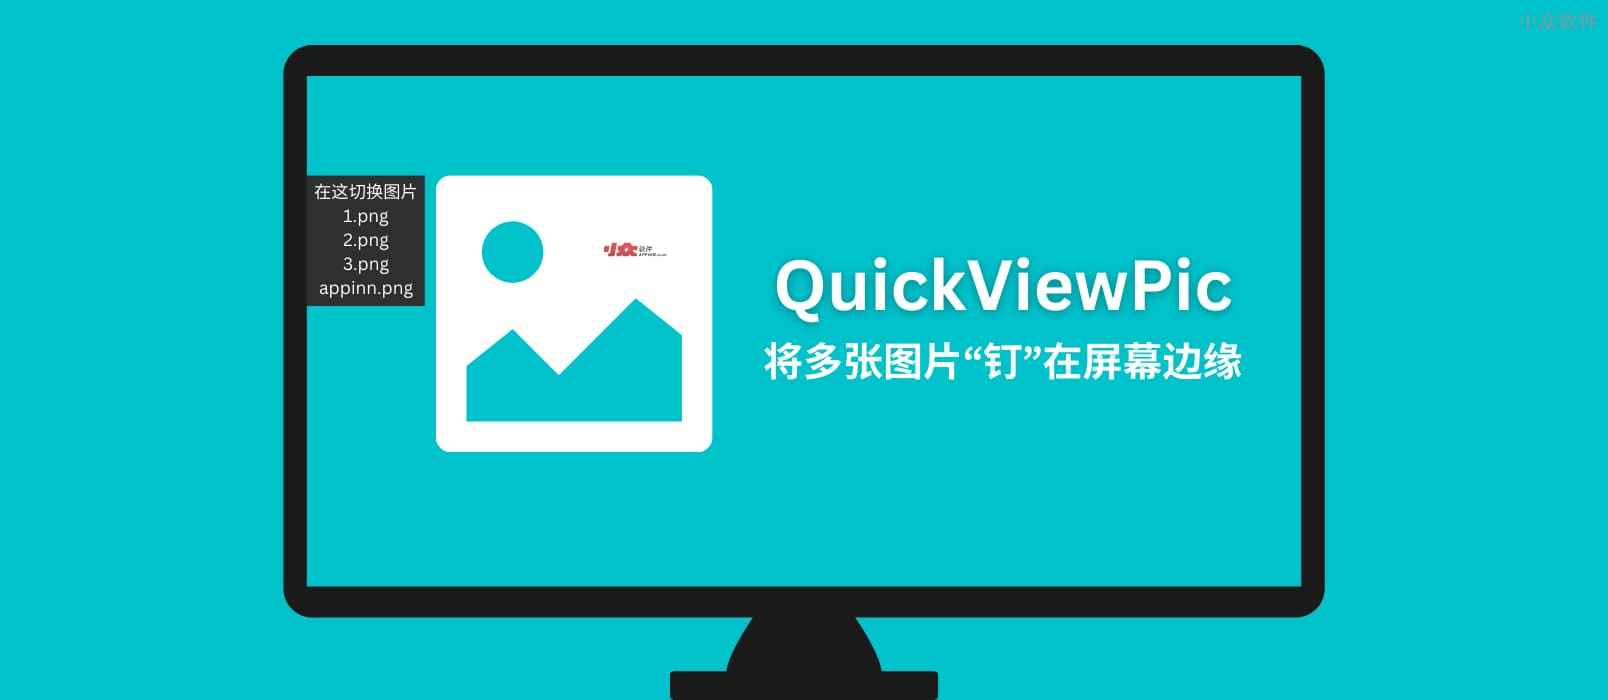 QuickViewPic - 将多张图片“钉”在屏幕边缘，快速切换查看[Windows]